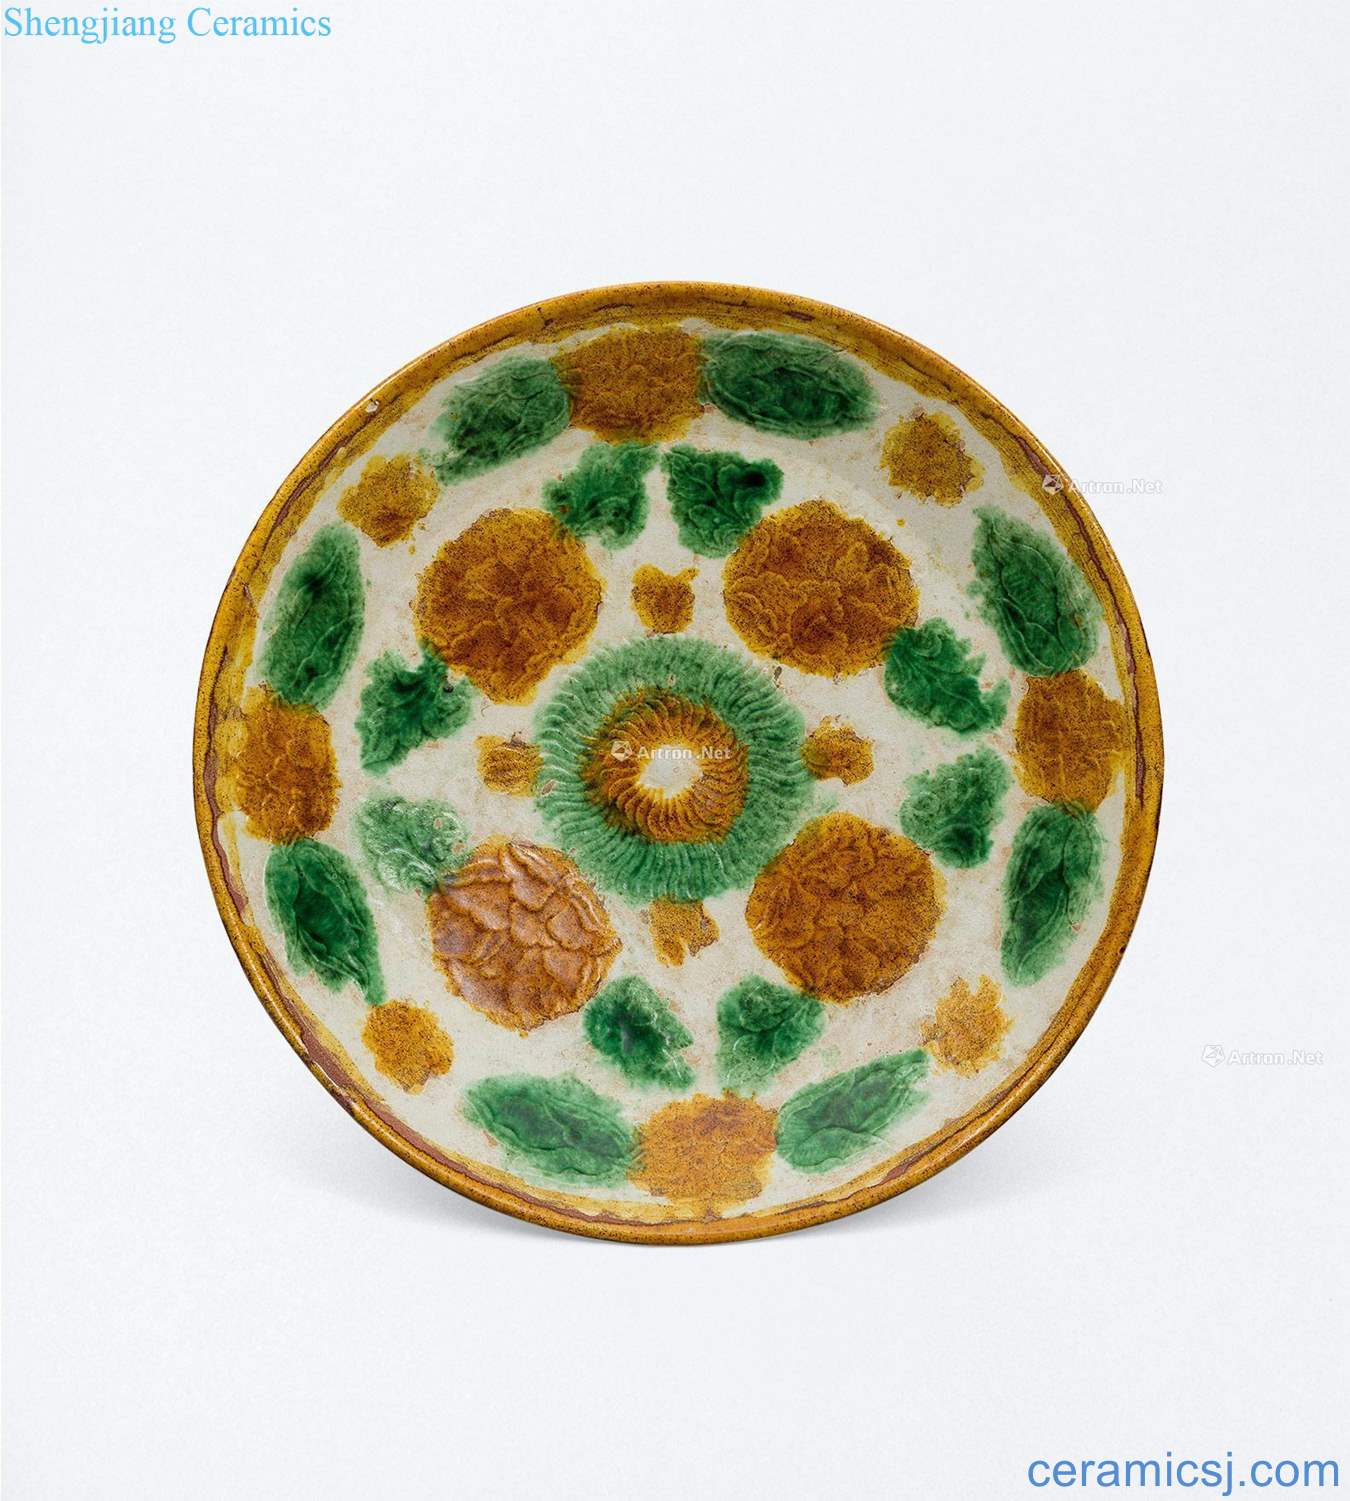 Liao dynasty three CaiTuan pattern plate